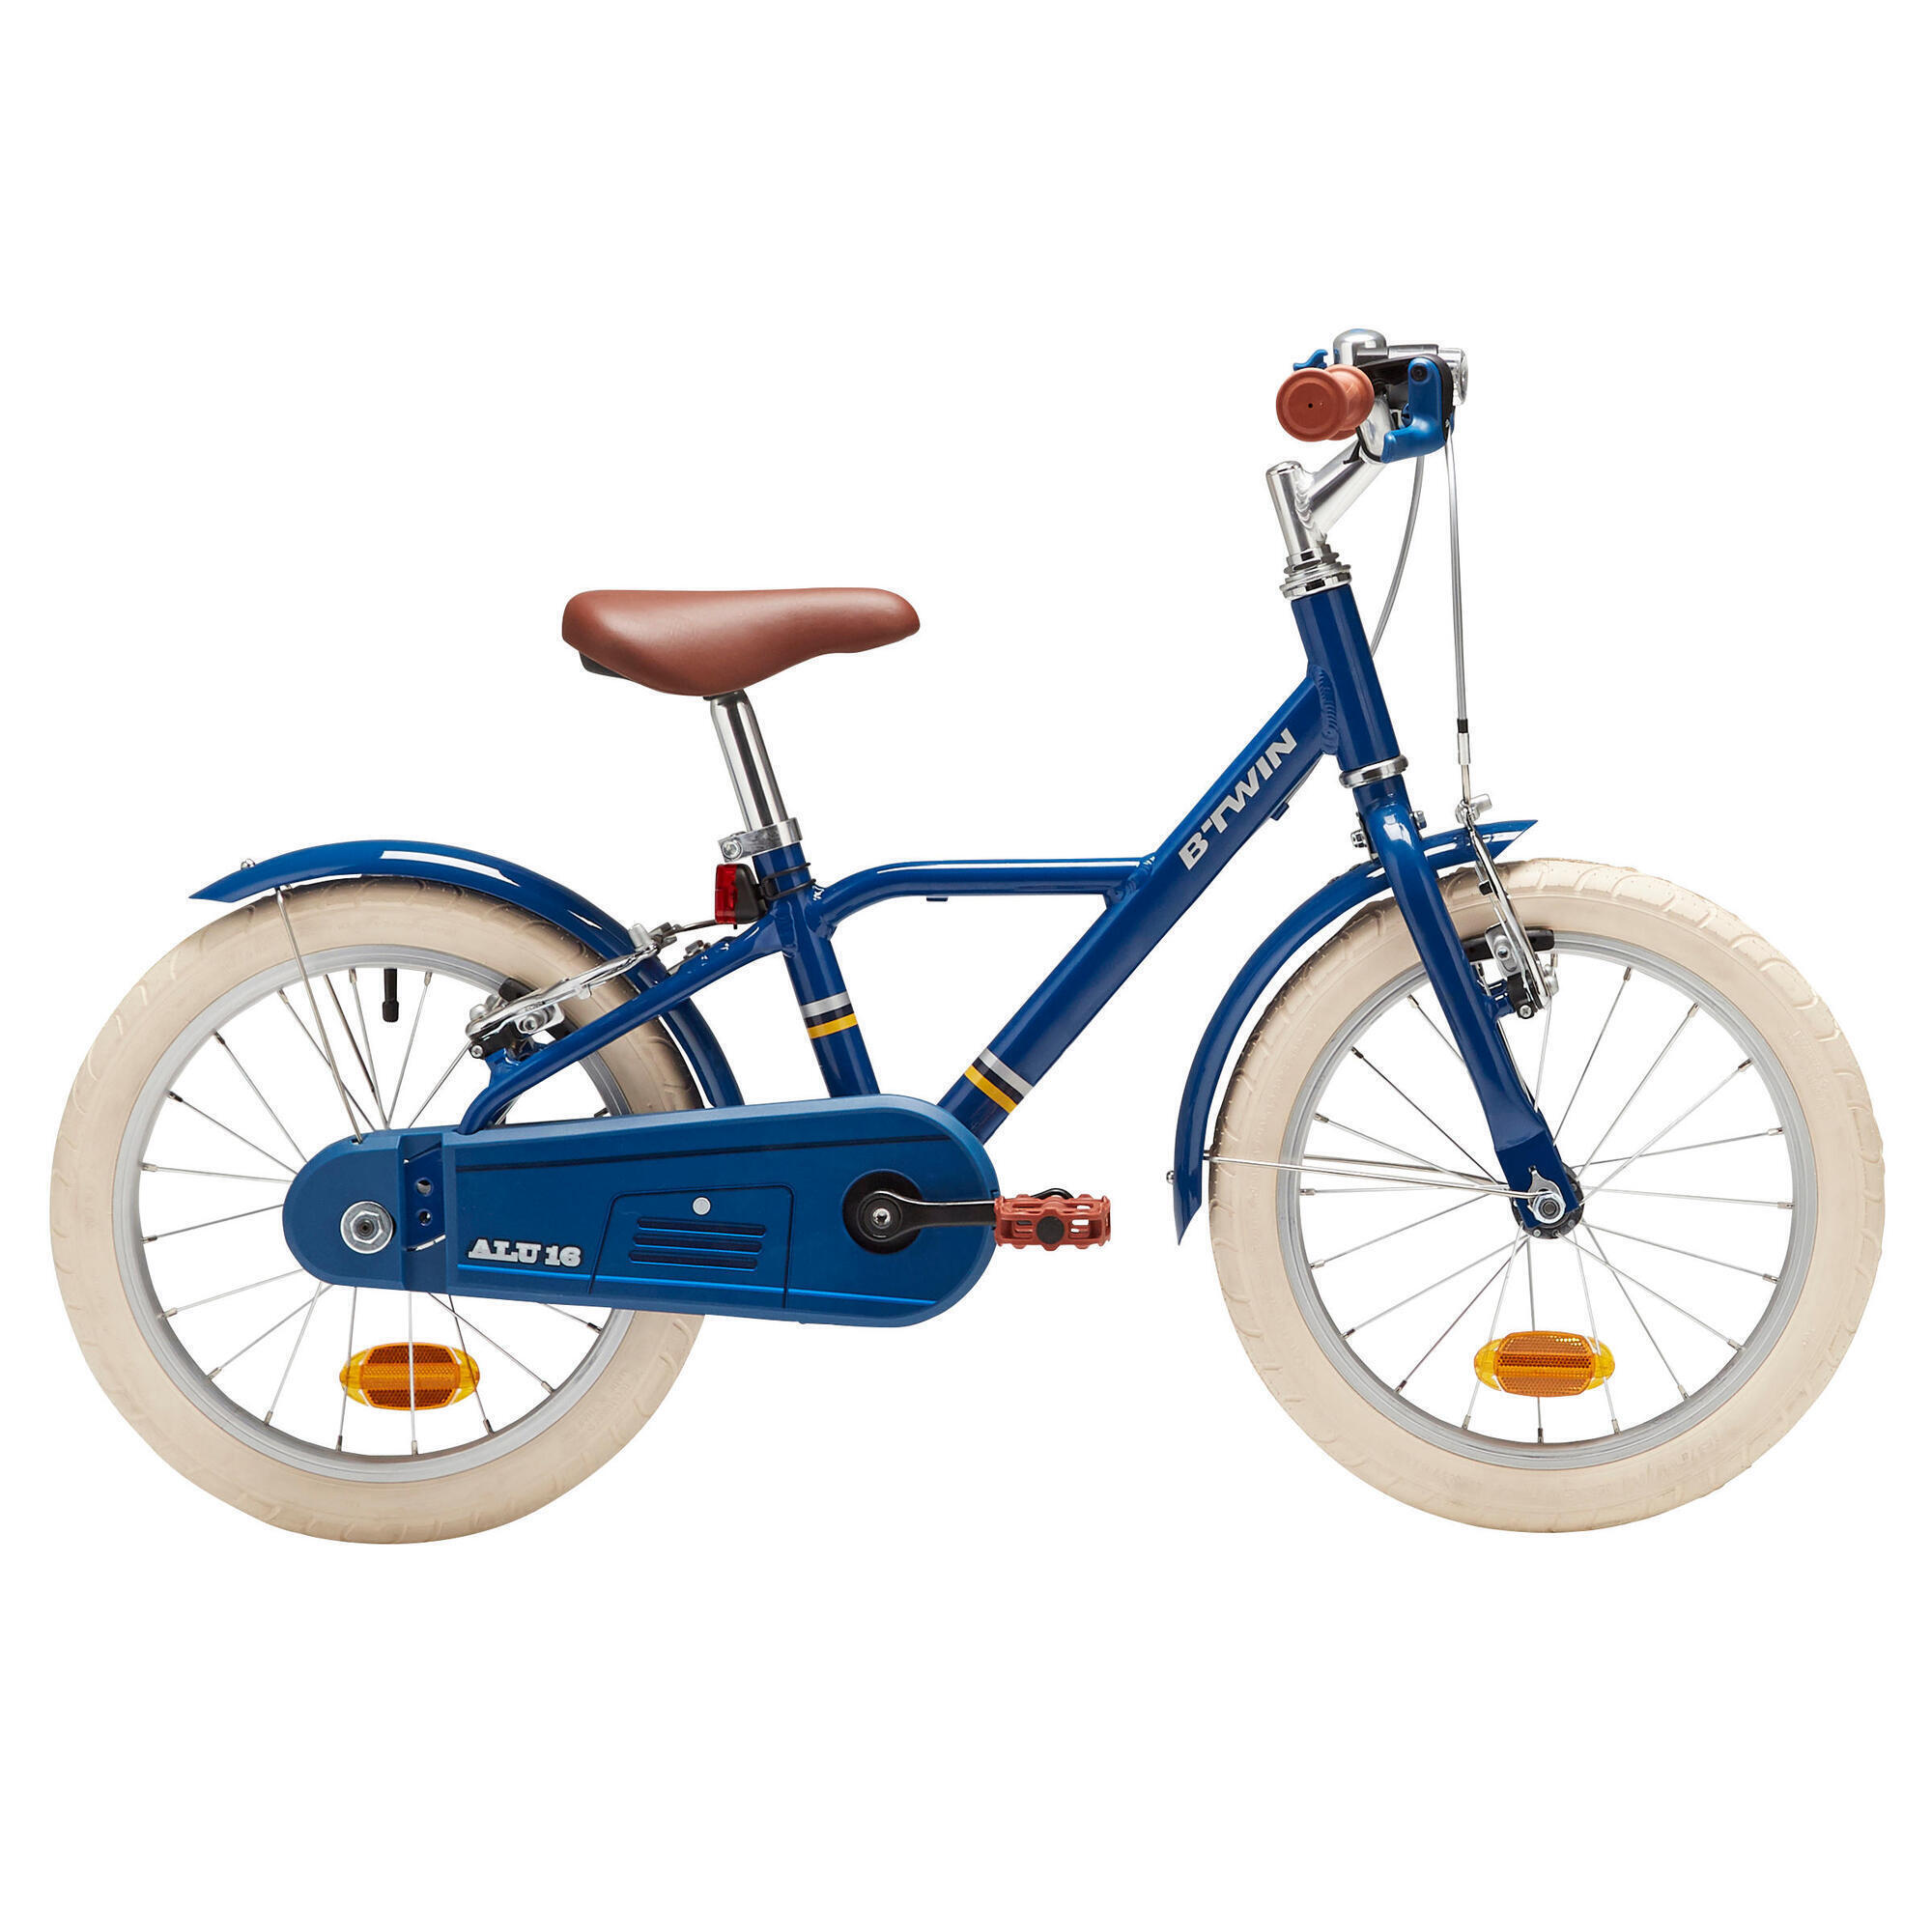 BTWIN Refurbished Kids 16-inch chain guard easy-braking bike - Blue - C Grade